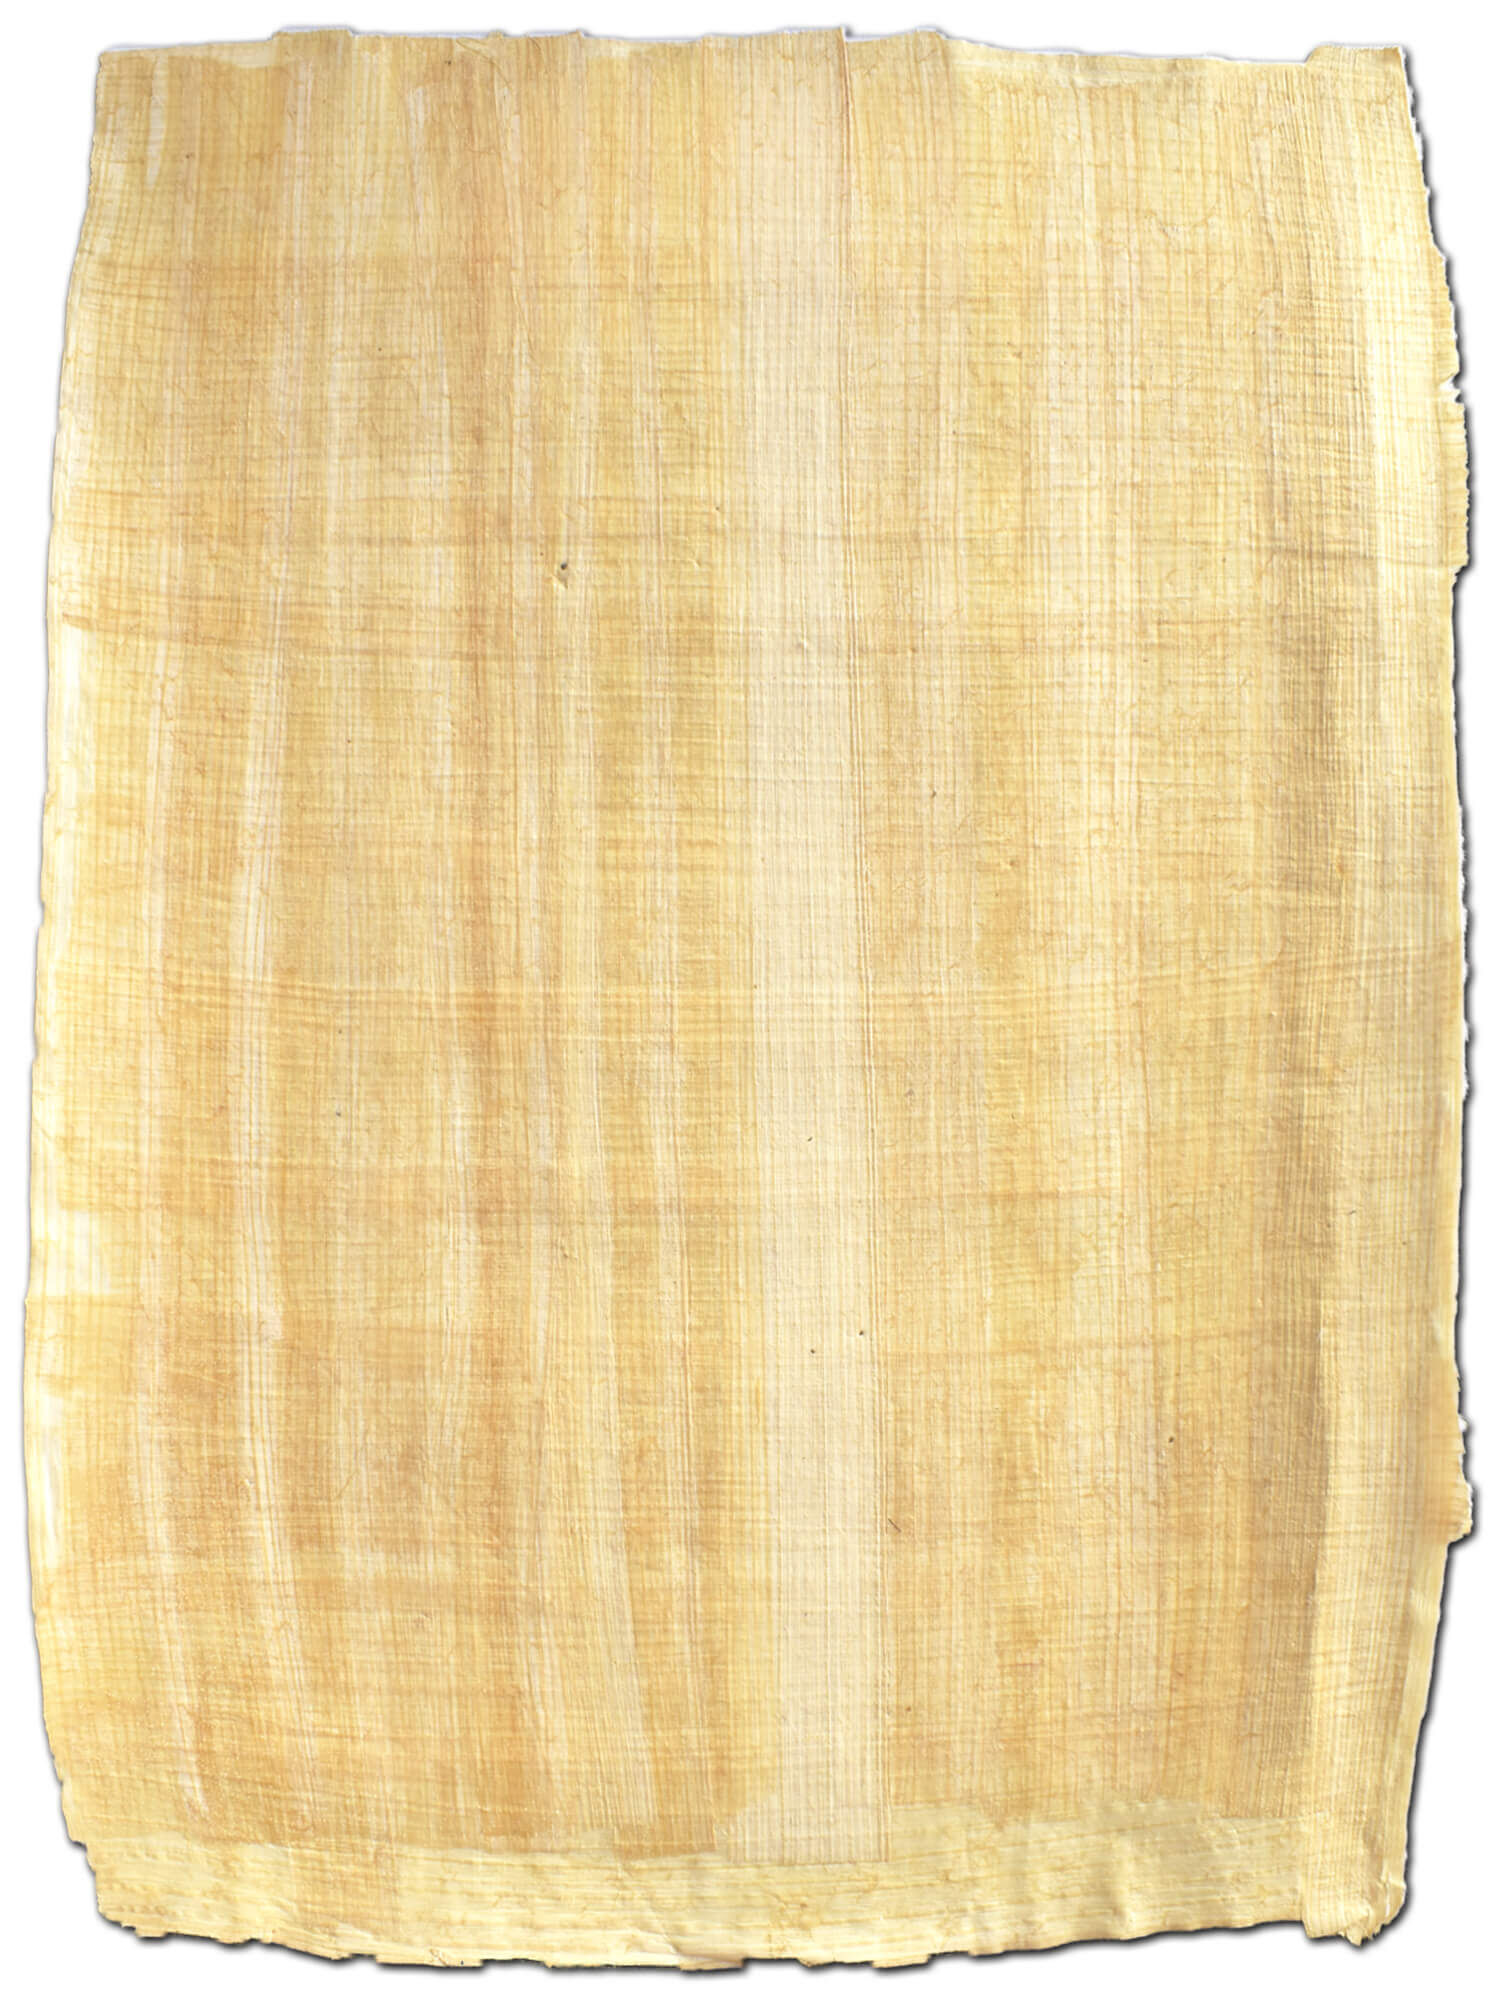 3 Blätter original Antik Papyrus in Premium Qualität holzfrei & vegan Sheets 